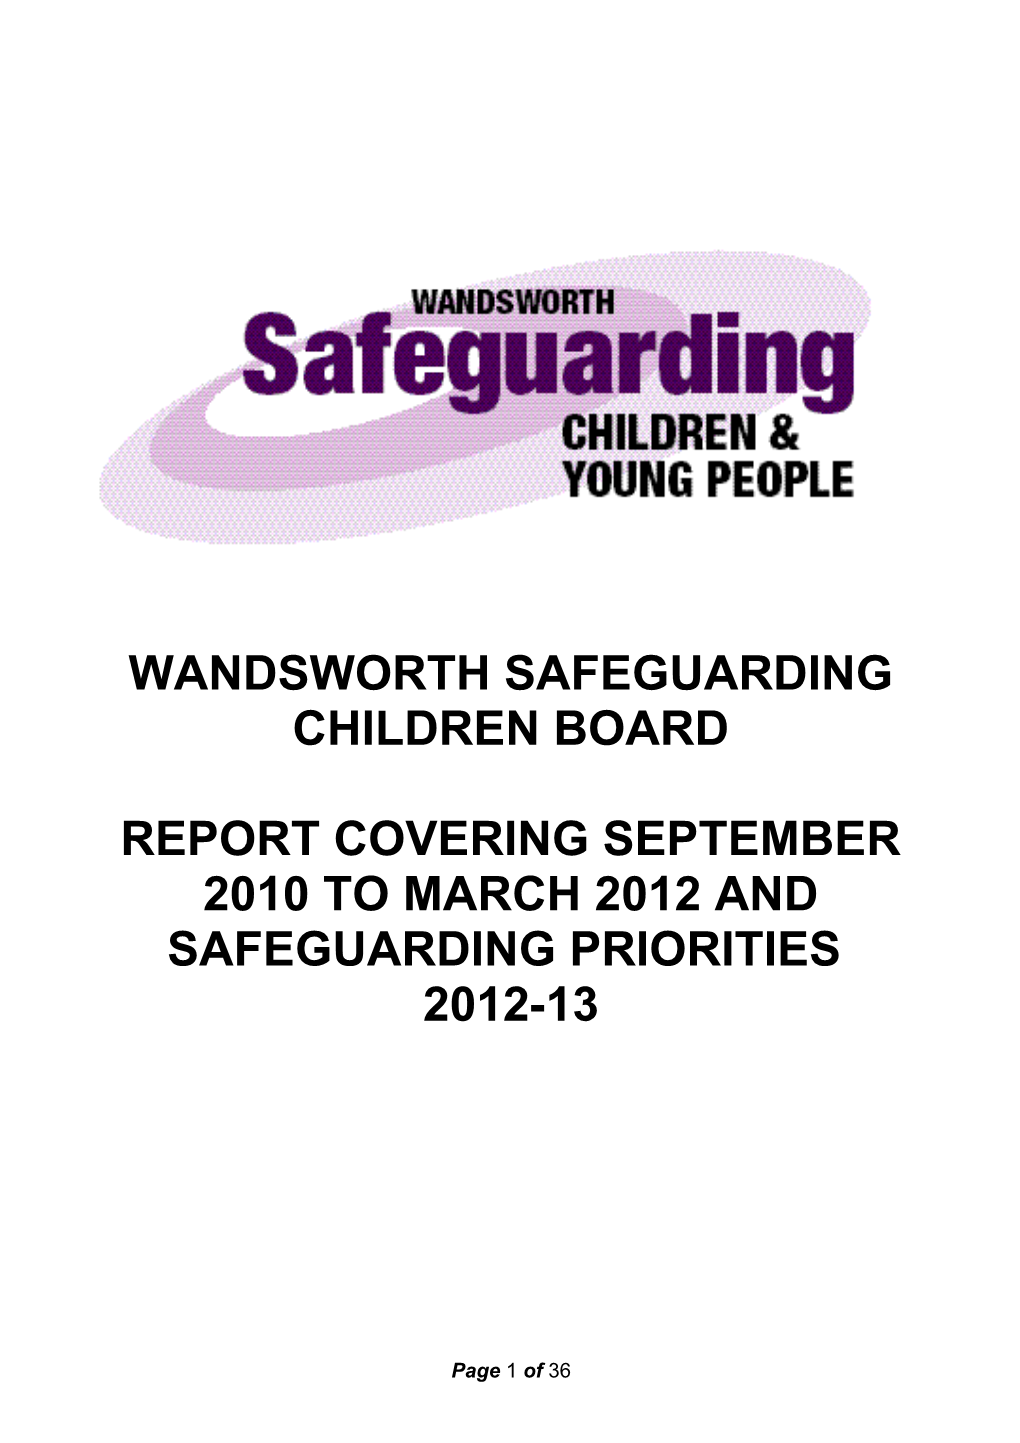 Wandsworth Safeguarding Children Board